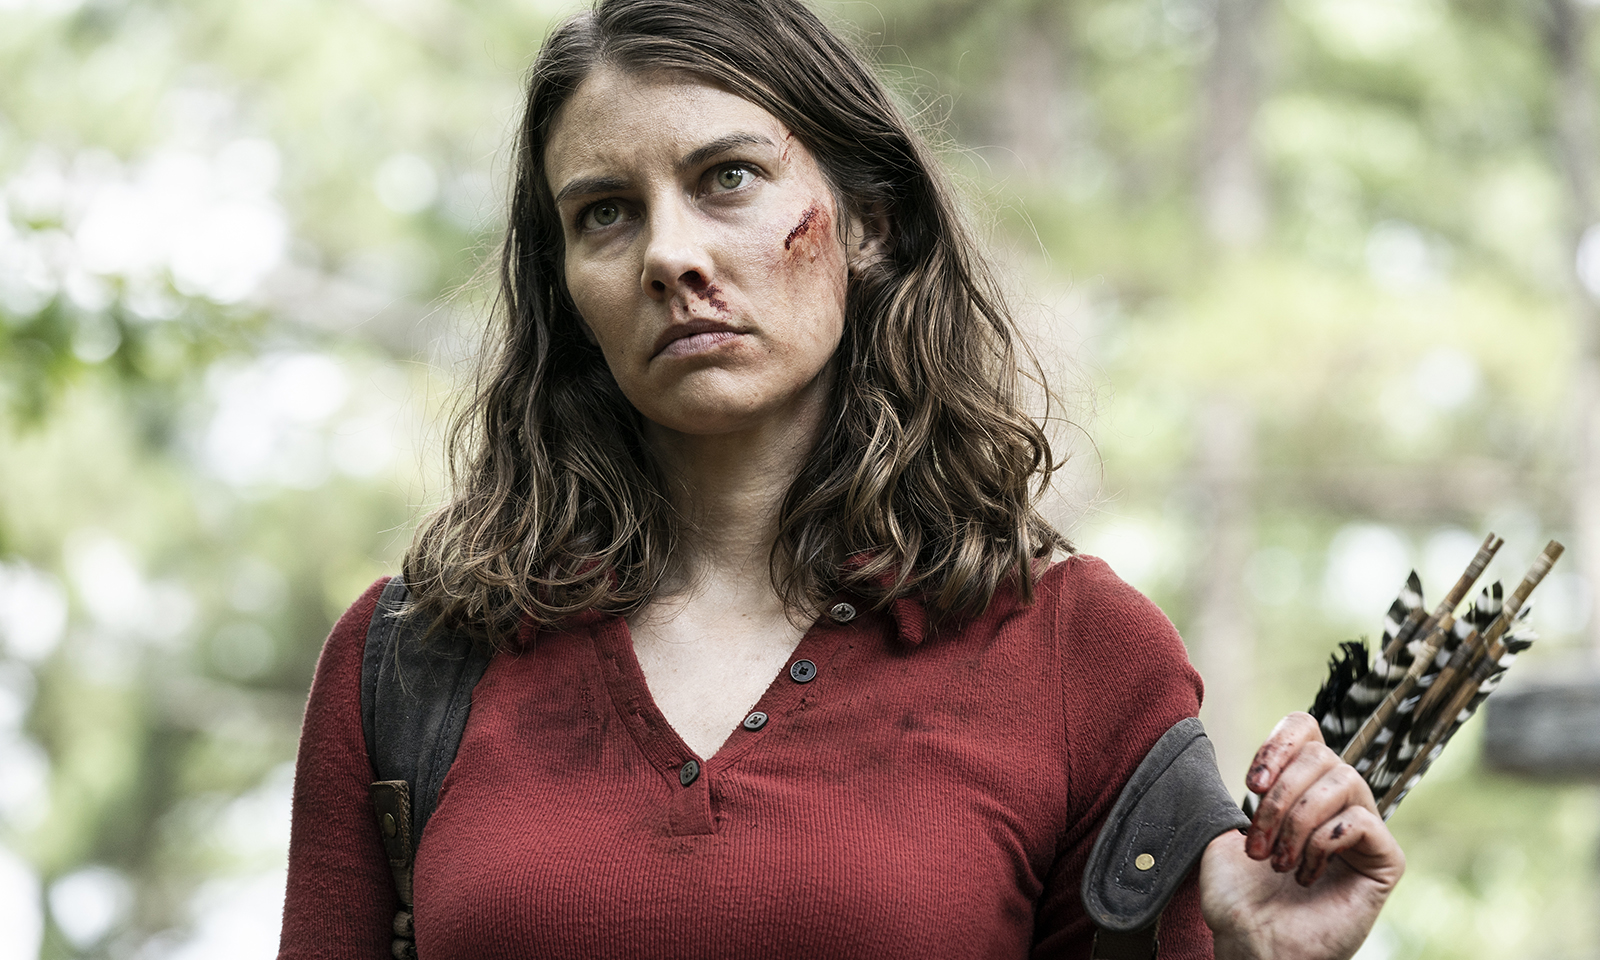 Maggie suja de sangue e observando algo no episódio 9 da 11ª temporada de The Walking Dead.